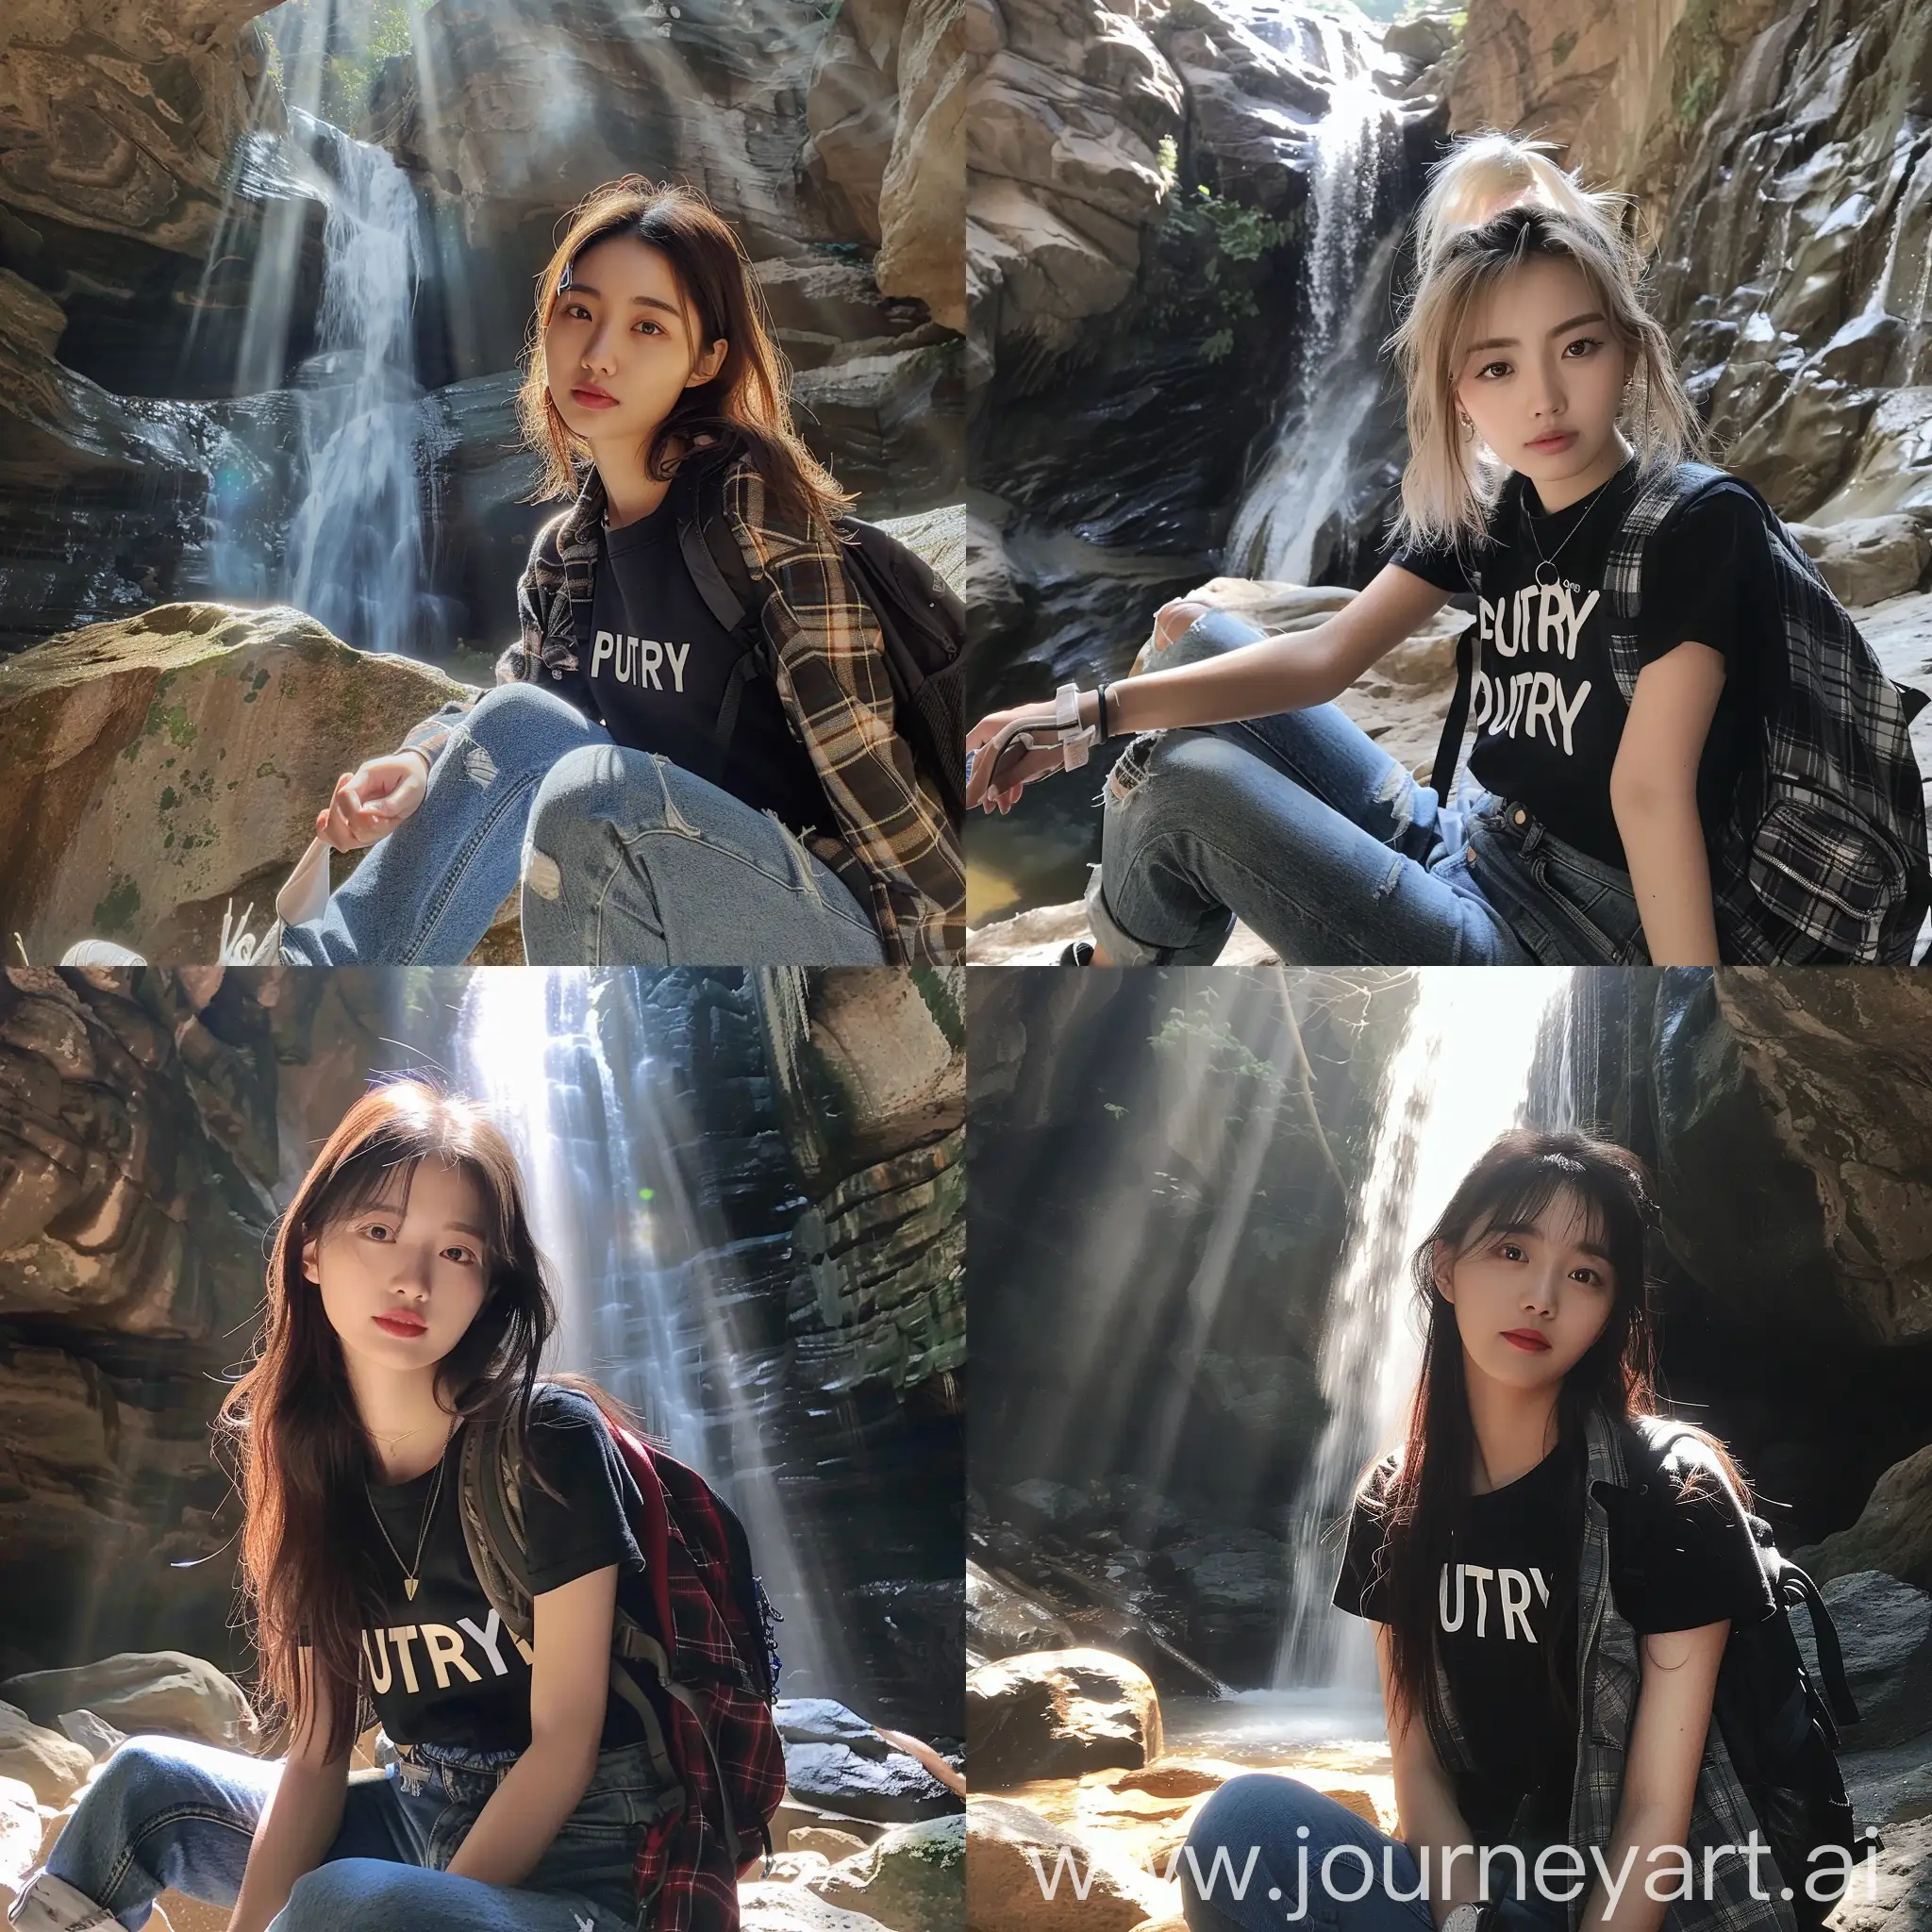 Young-Korean-Woman-Taking-Selfie-in-Cave-Near-Waterfall